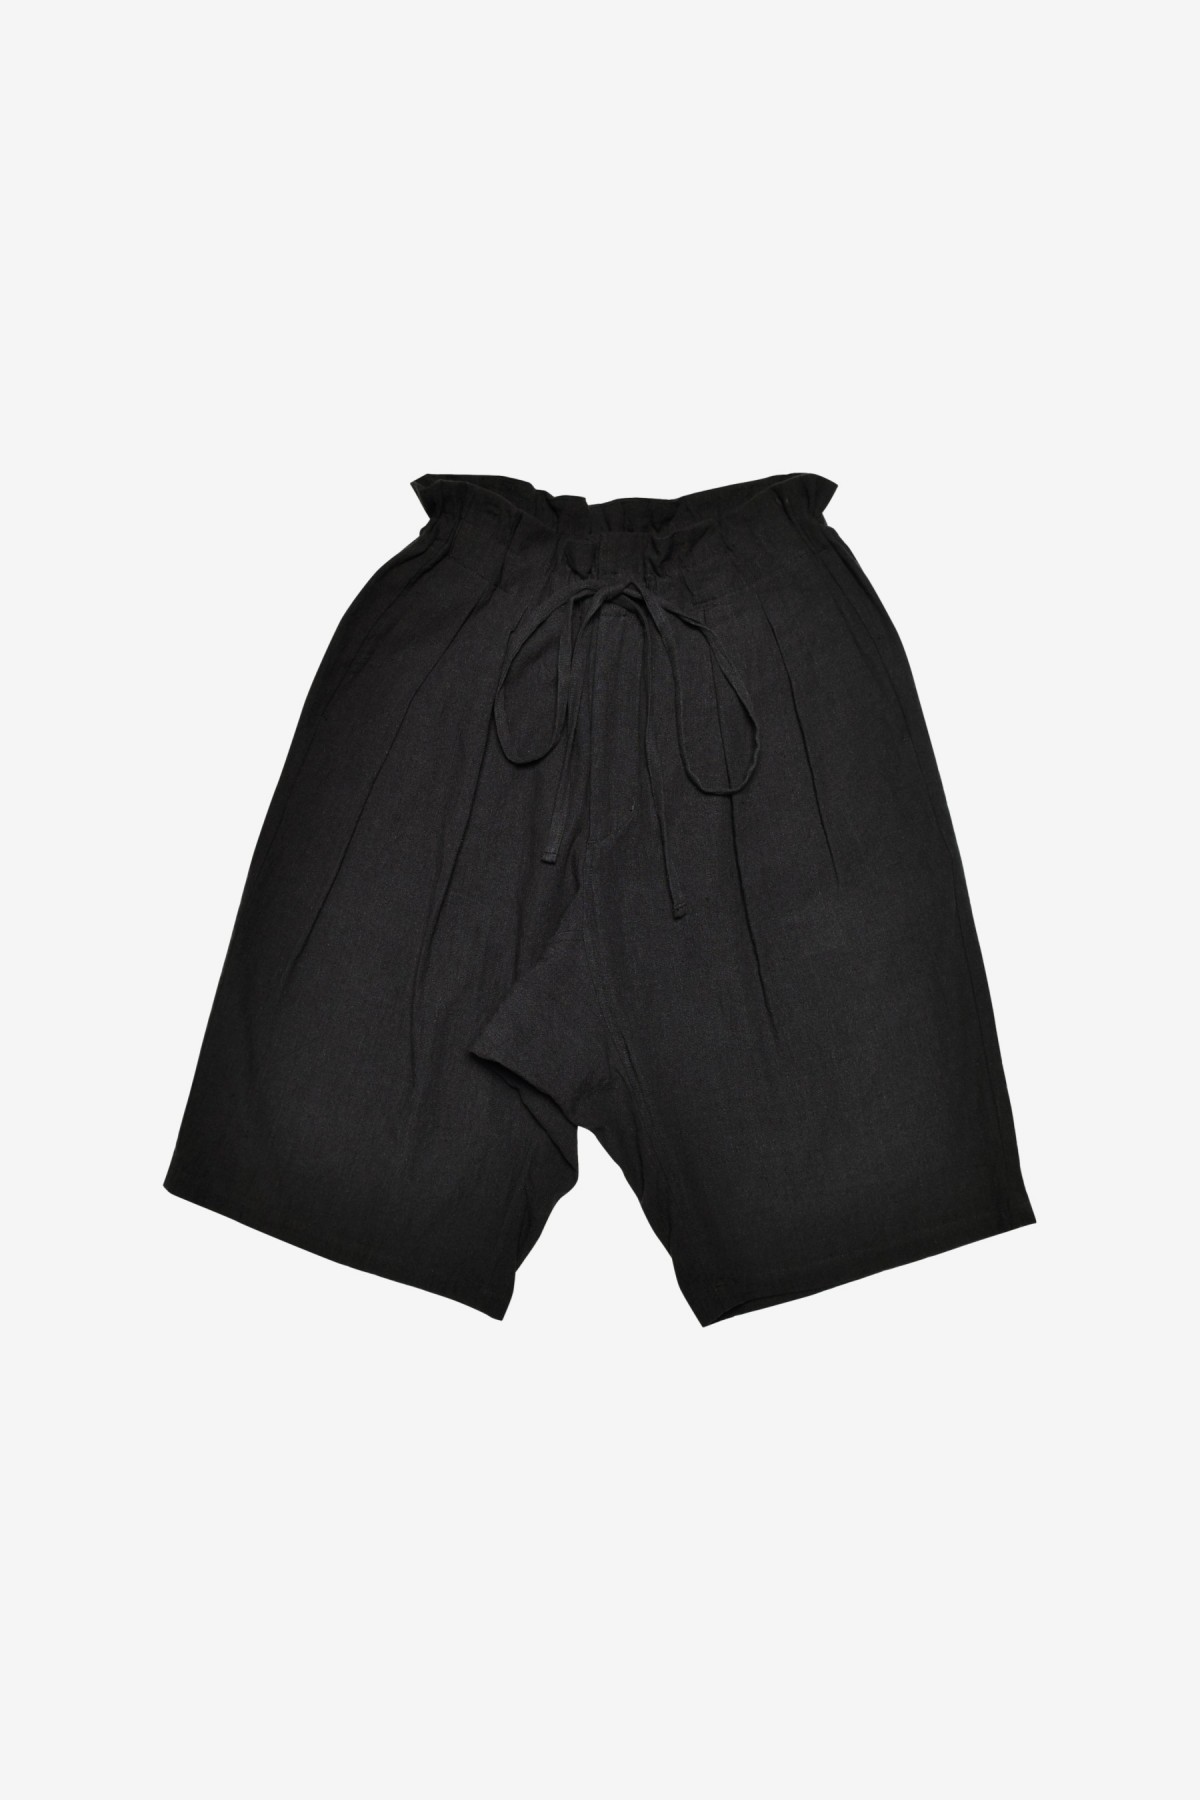 Monitaly Drop Crotch Shorts in 230G Linen Black